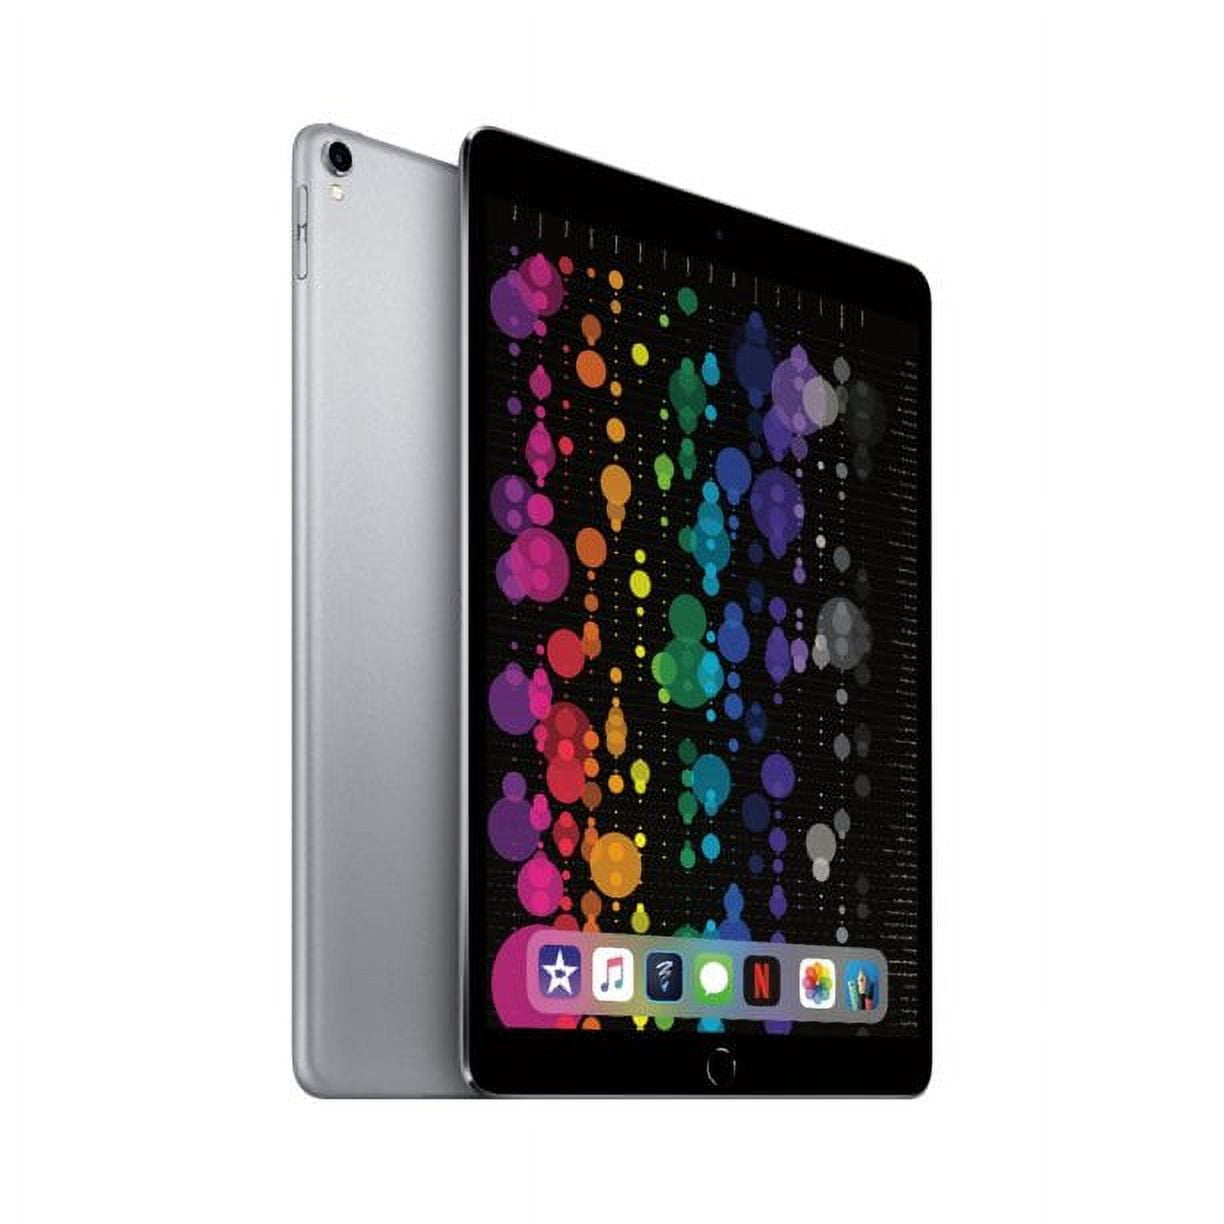 Apple iPad Pro 10.5-inch Wi-Fi + Cellular - Space Gray 256GB 